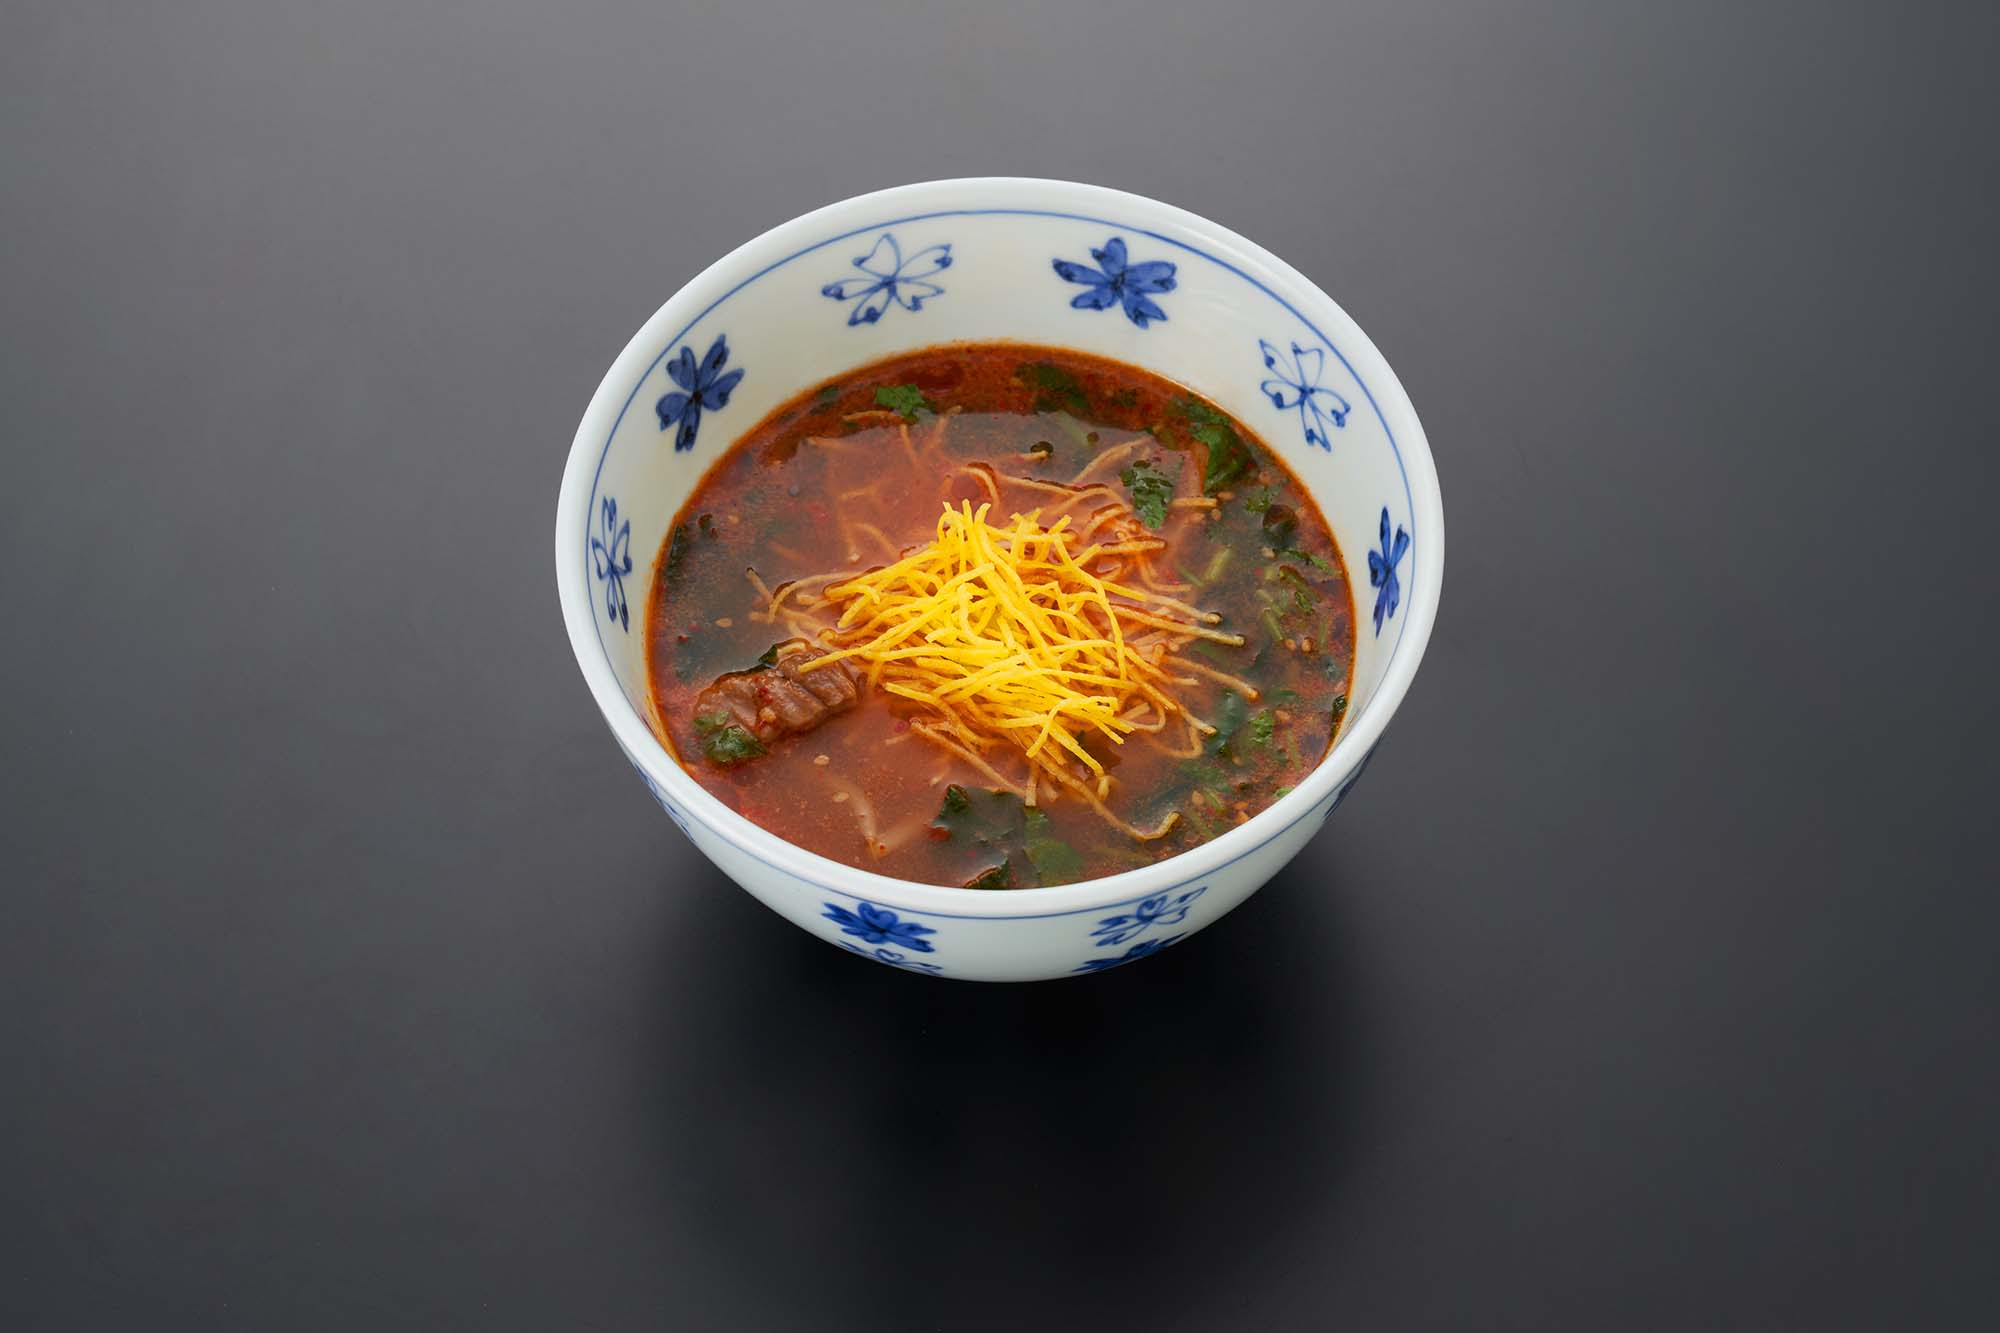 Dalg-gaejang soup